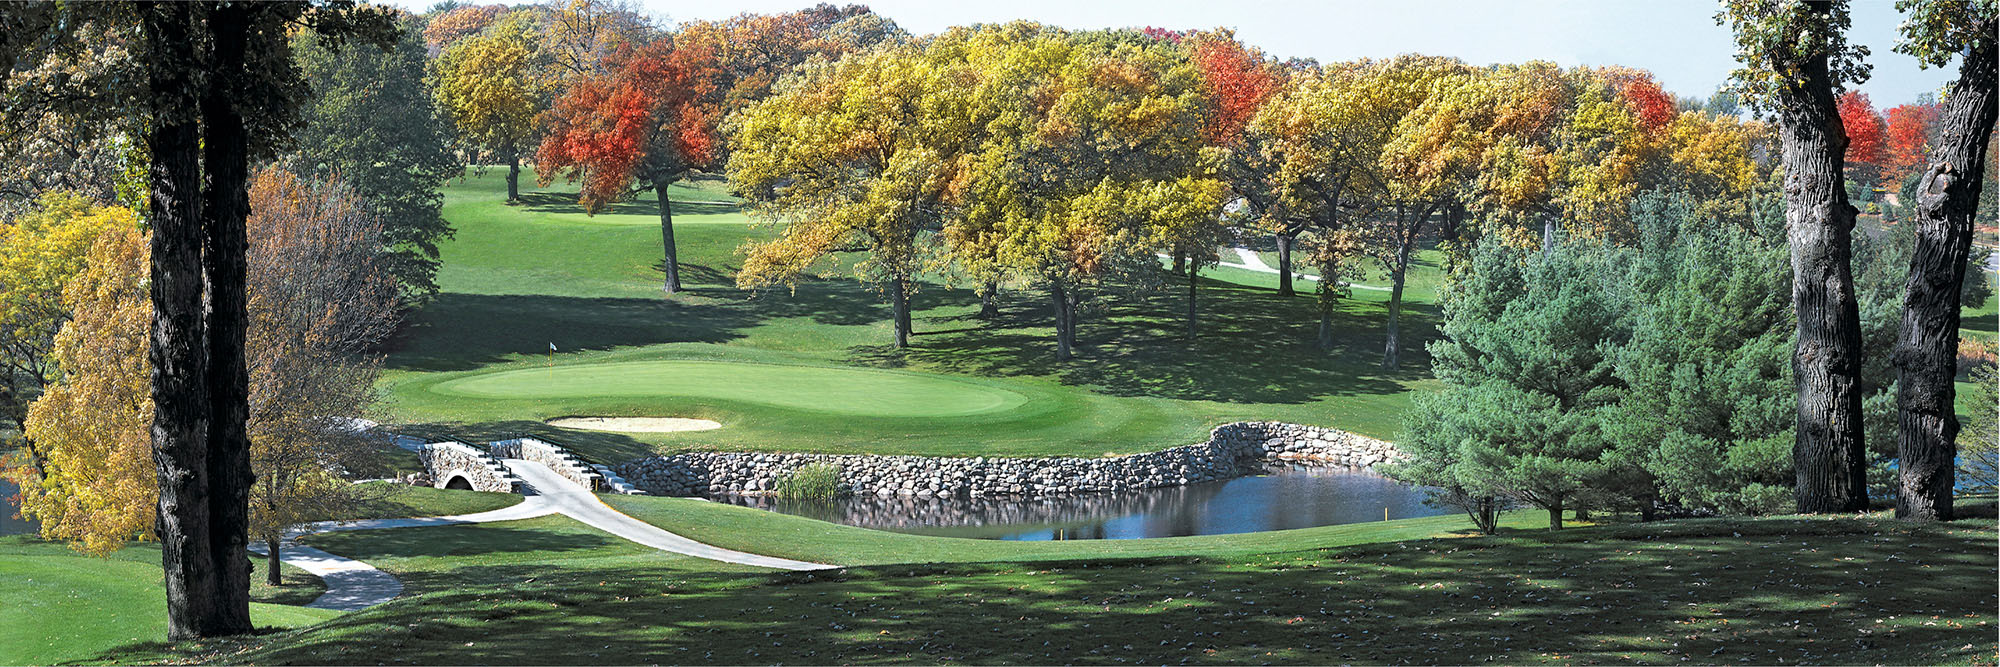 Golf Course Image - Wakonda No. 17